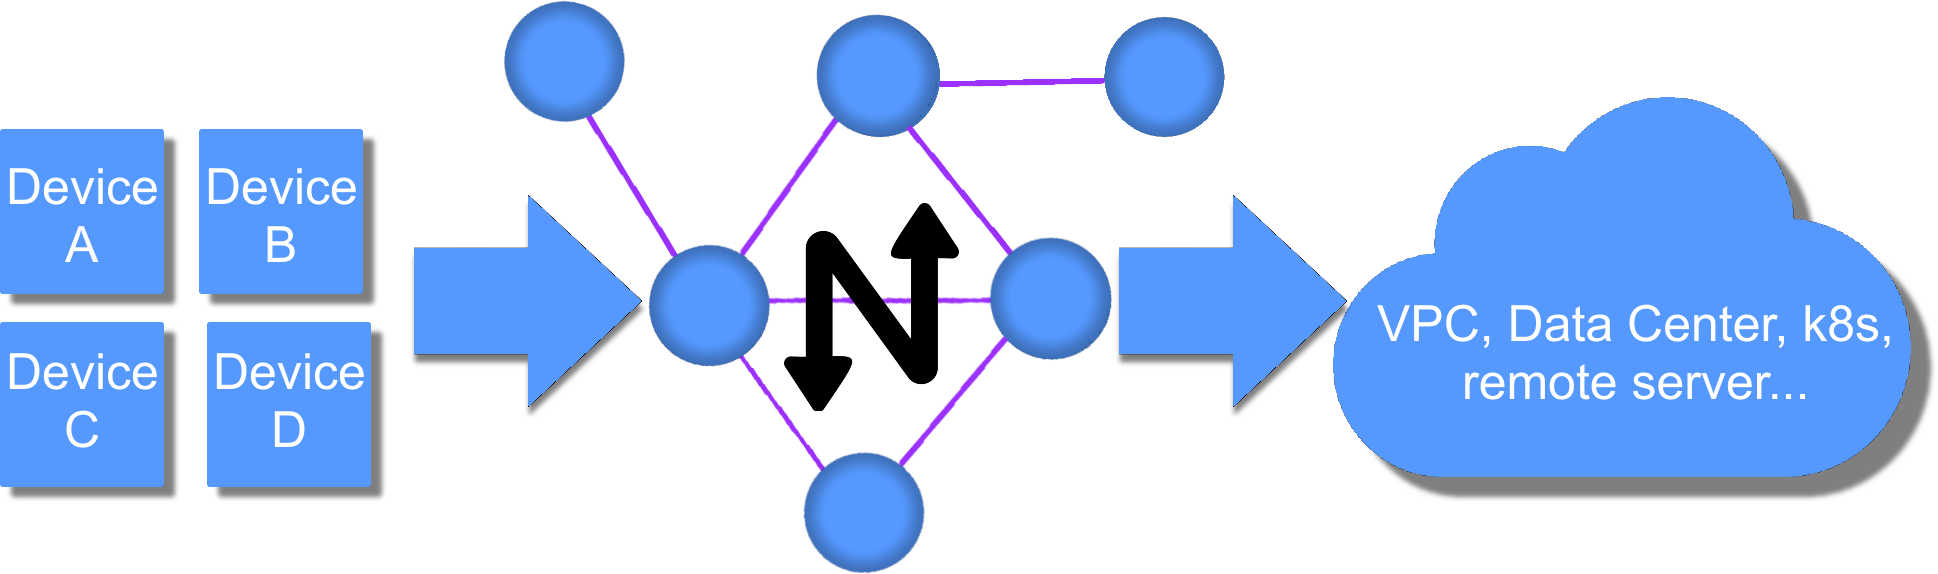 Netmaker Architecture Diagram